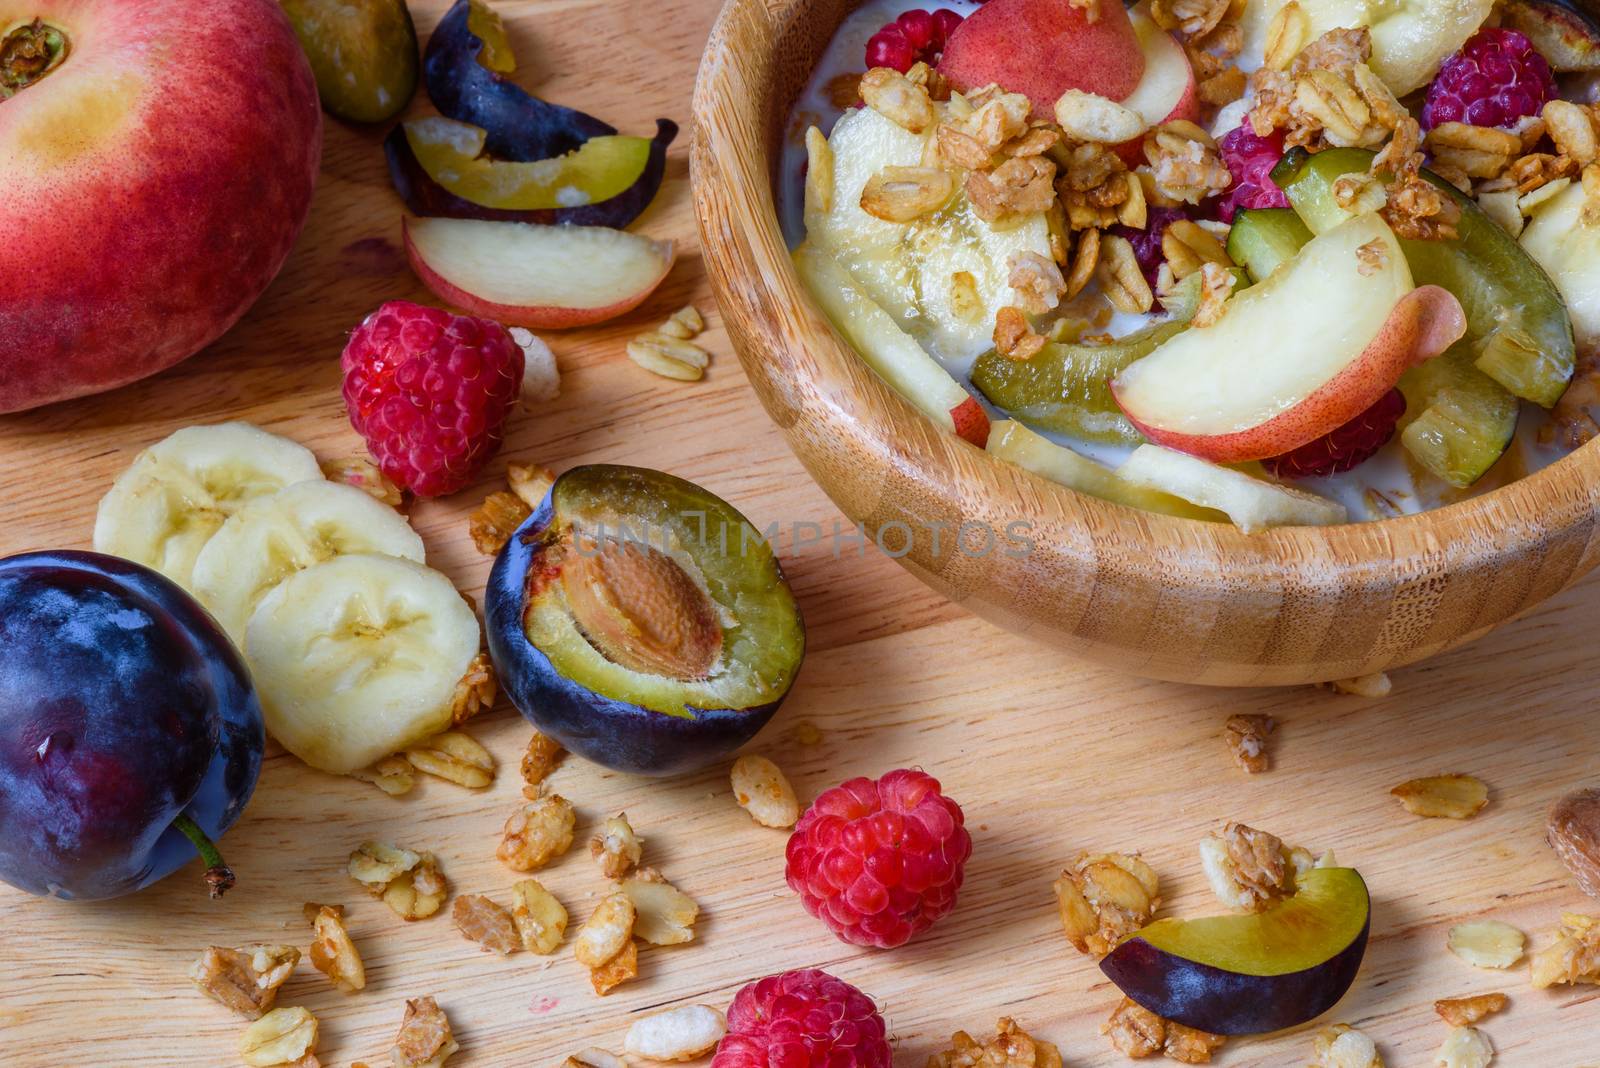 Muesli with berries, fruits and milk - healthy breakfast. by Seva_blsv